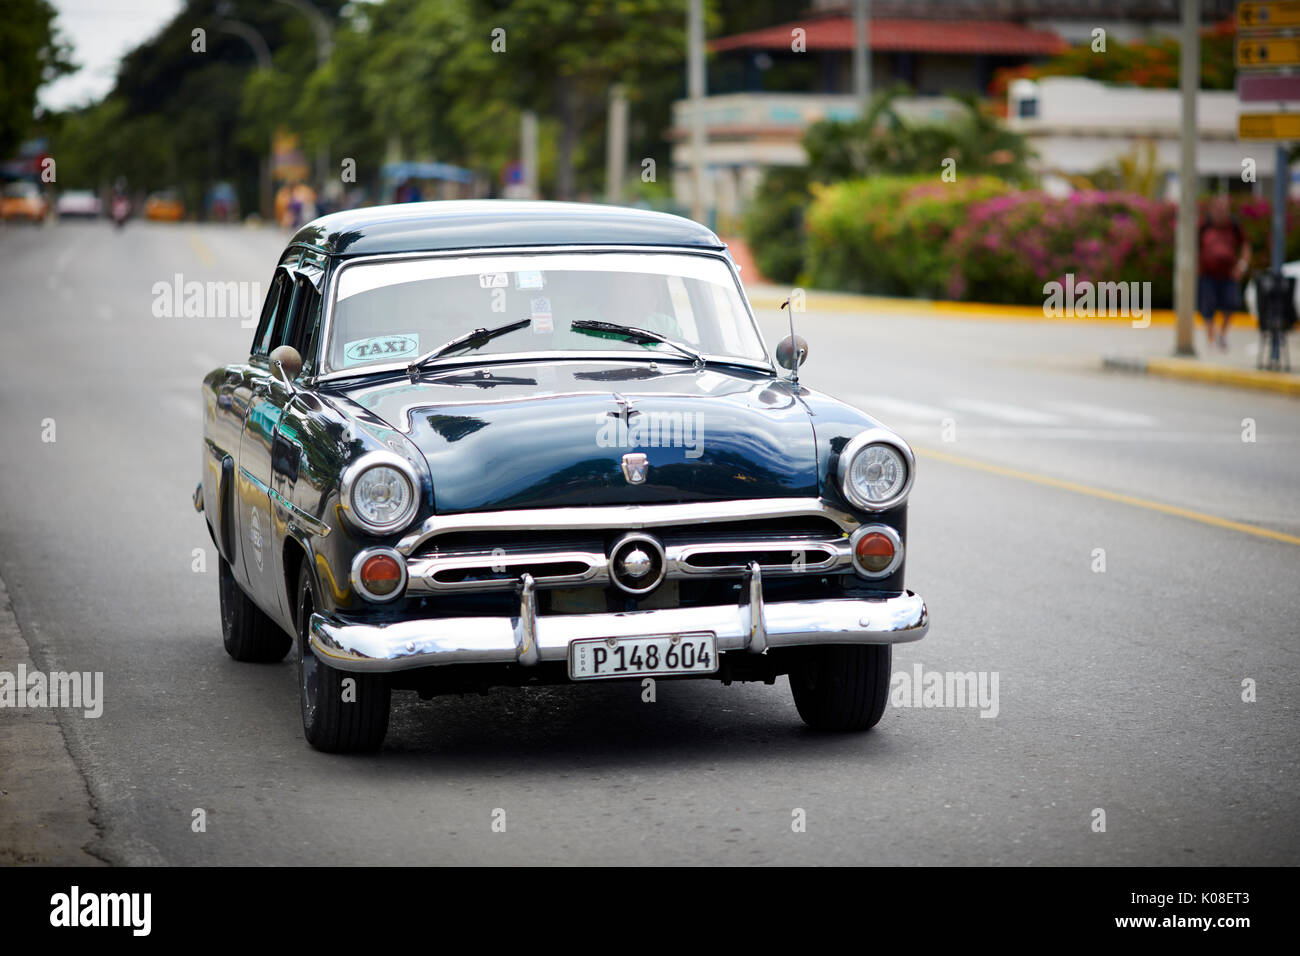 Retro classic American car  Varadero, Cuba, a Caribbean island nation under communist rule Stock Photo